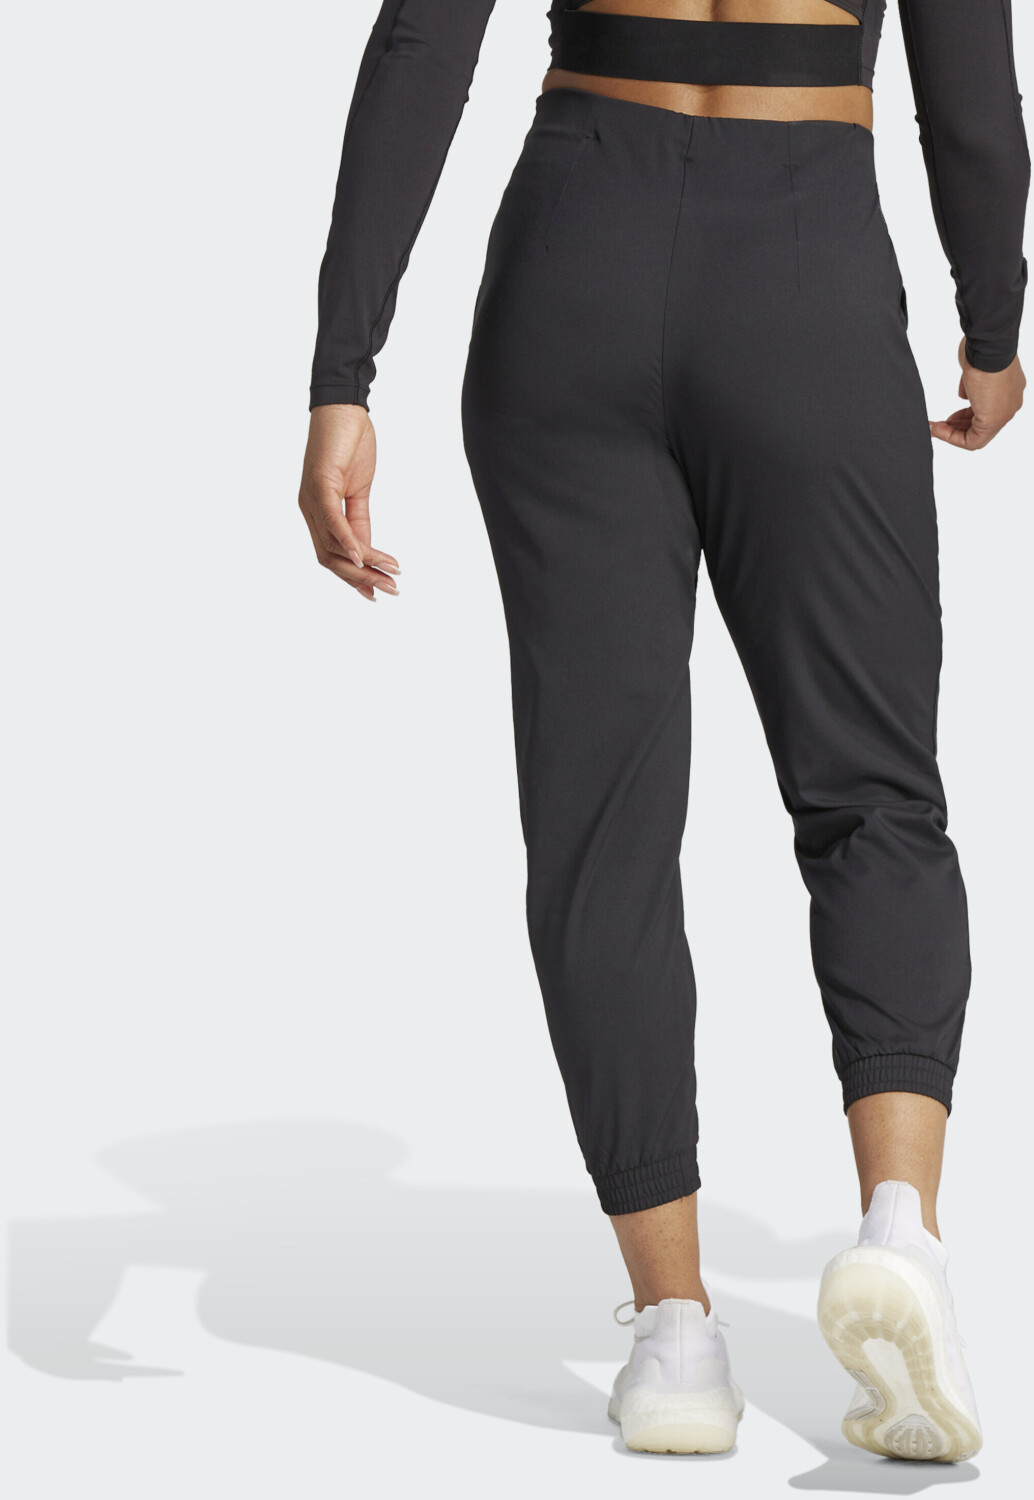 Adidas Woman AEROREADY Train Essentials Minimal Branding Woven Pants black/ white (IJ5923) ab 32,99 € | Preisvergleich bei